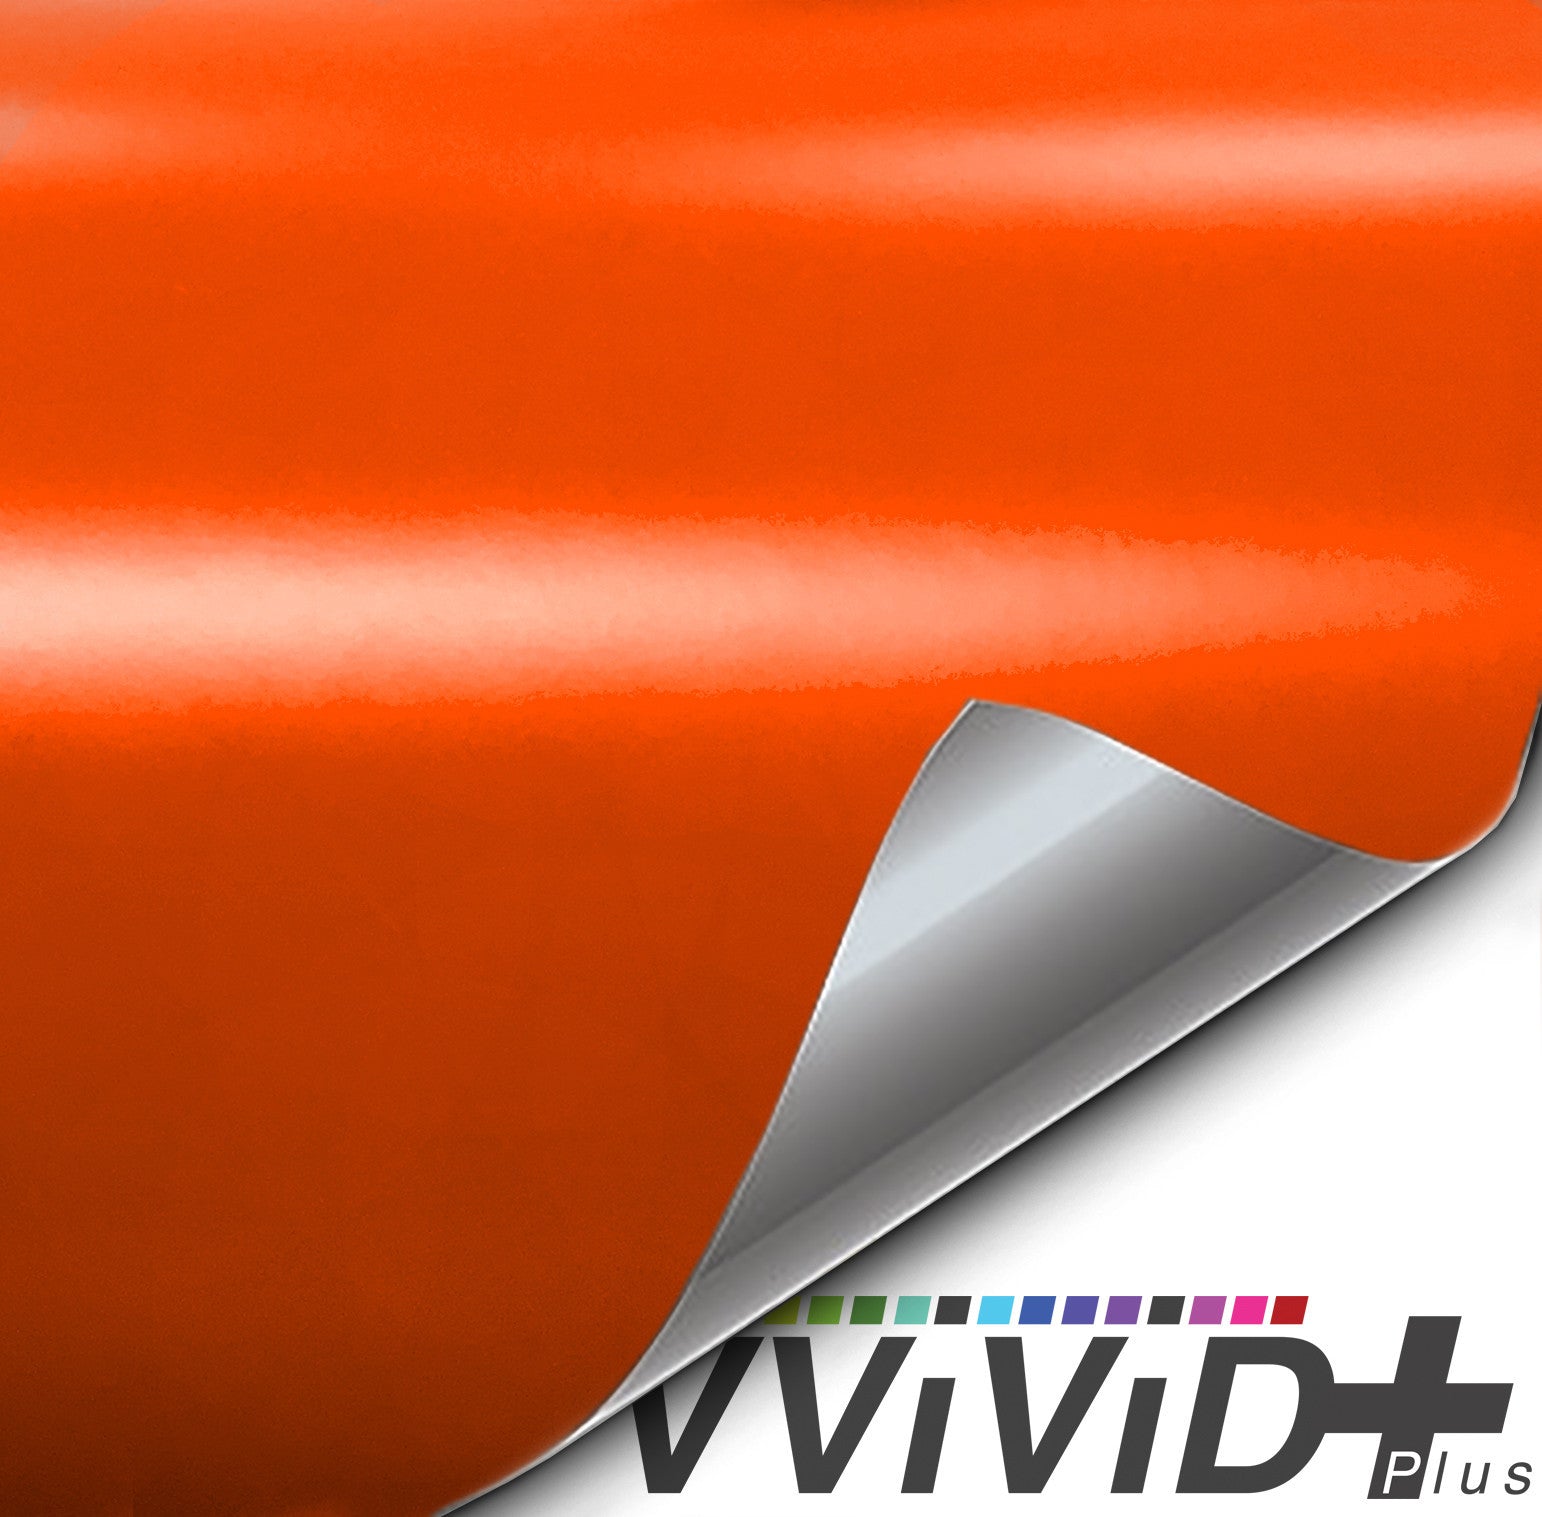 2017 VViViD+ Matte Arancio Argos (Orange/Red Lamborghini) Vinyl Wrap | Vvivid Canada